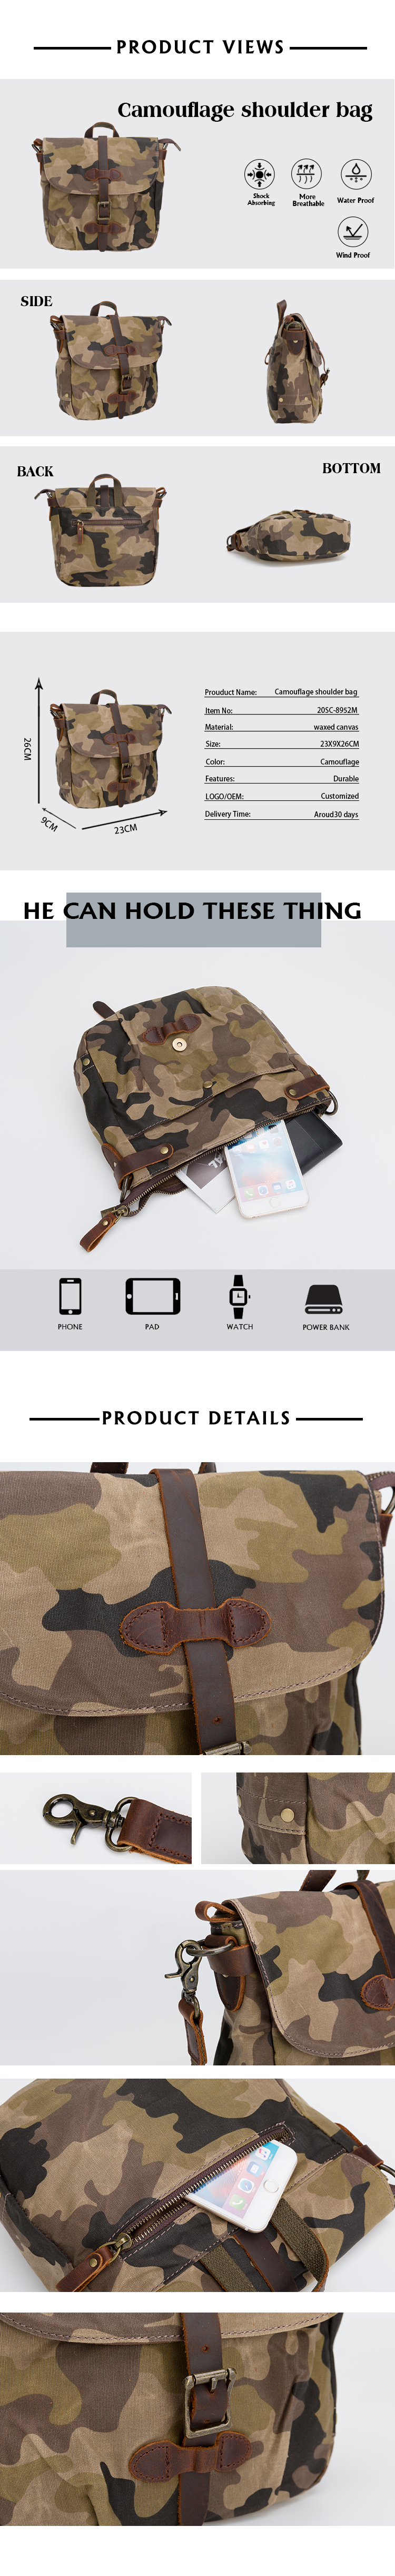 Camouflage Canvas Messenger Outdoor Bag For Men